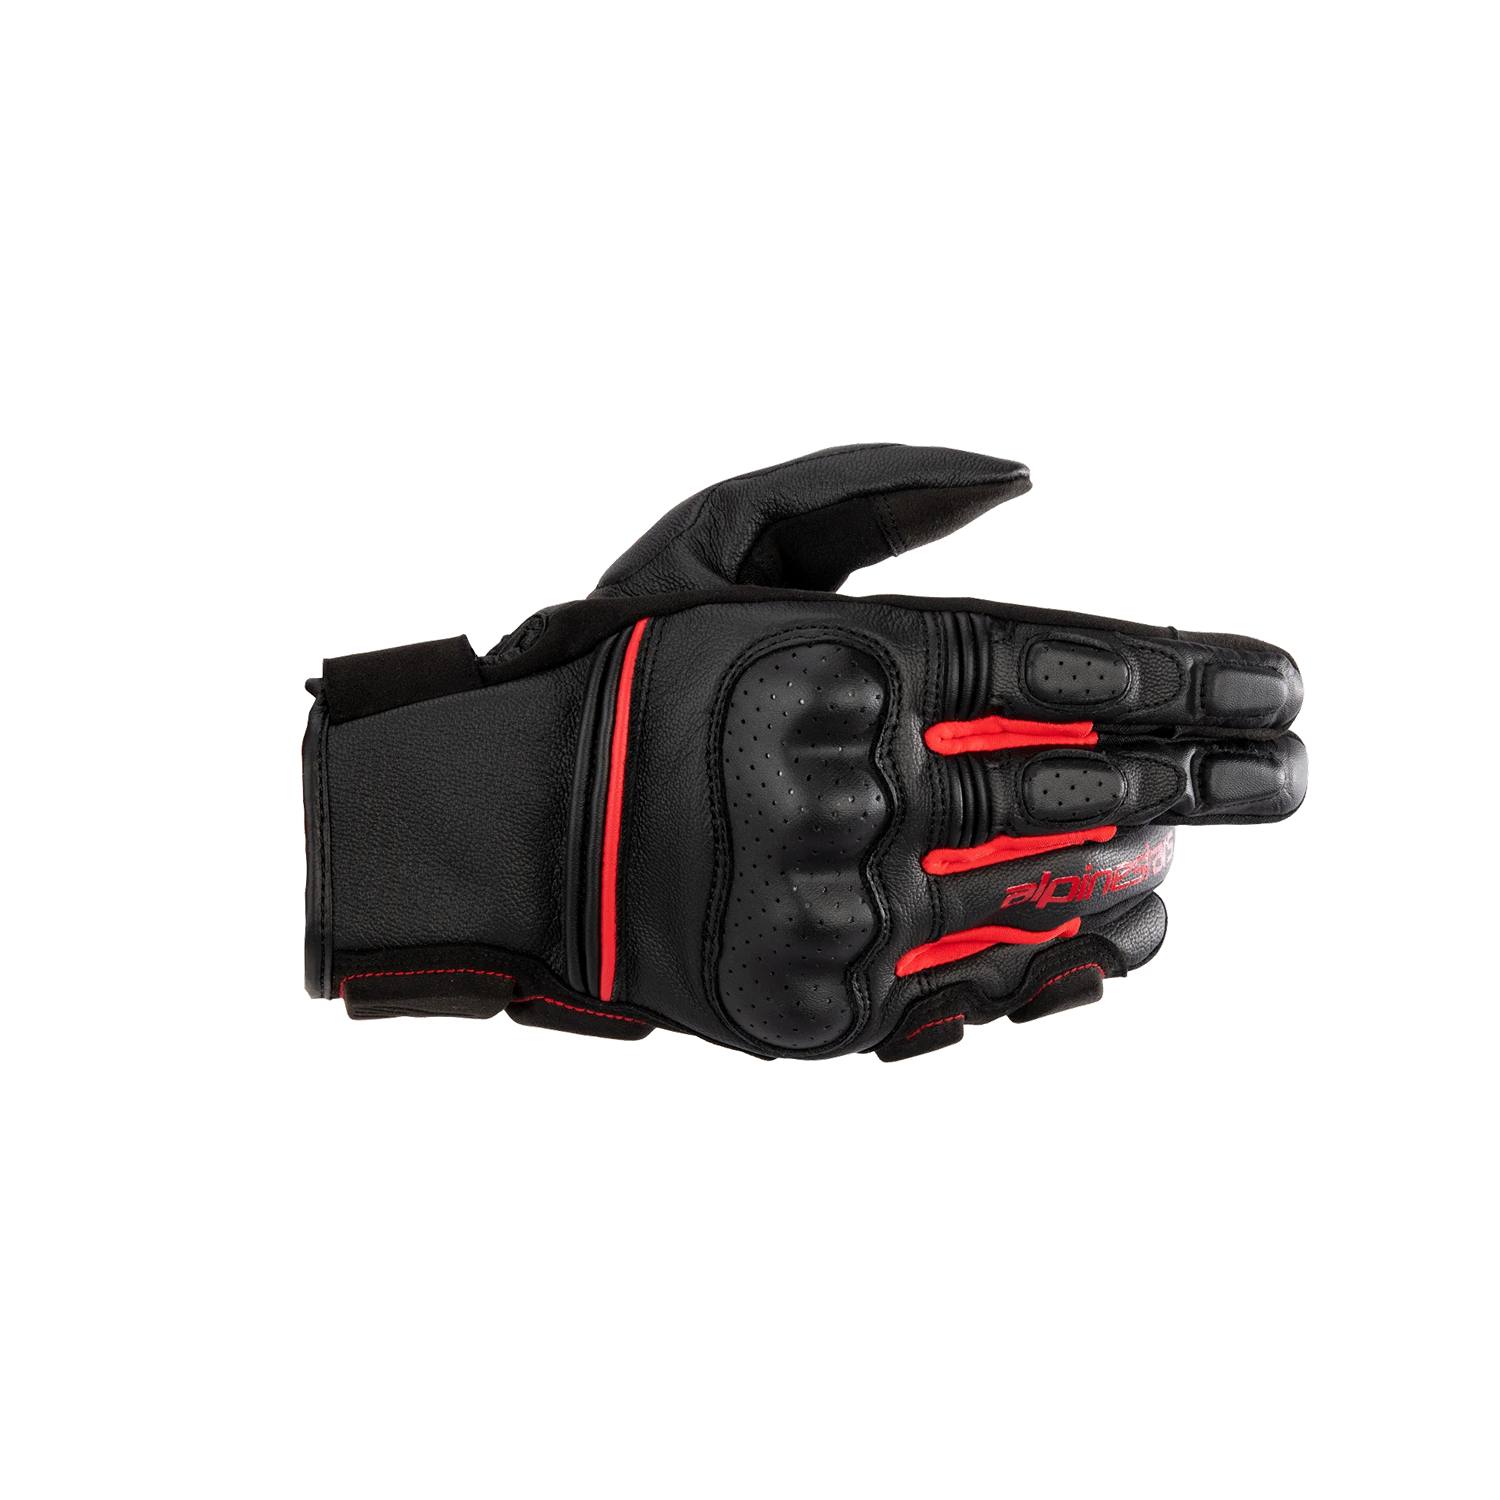 Image of Alpinestars Phenom Leather Gloves Black Bright Red Taille S